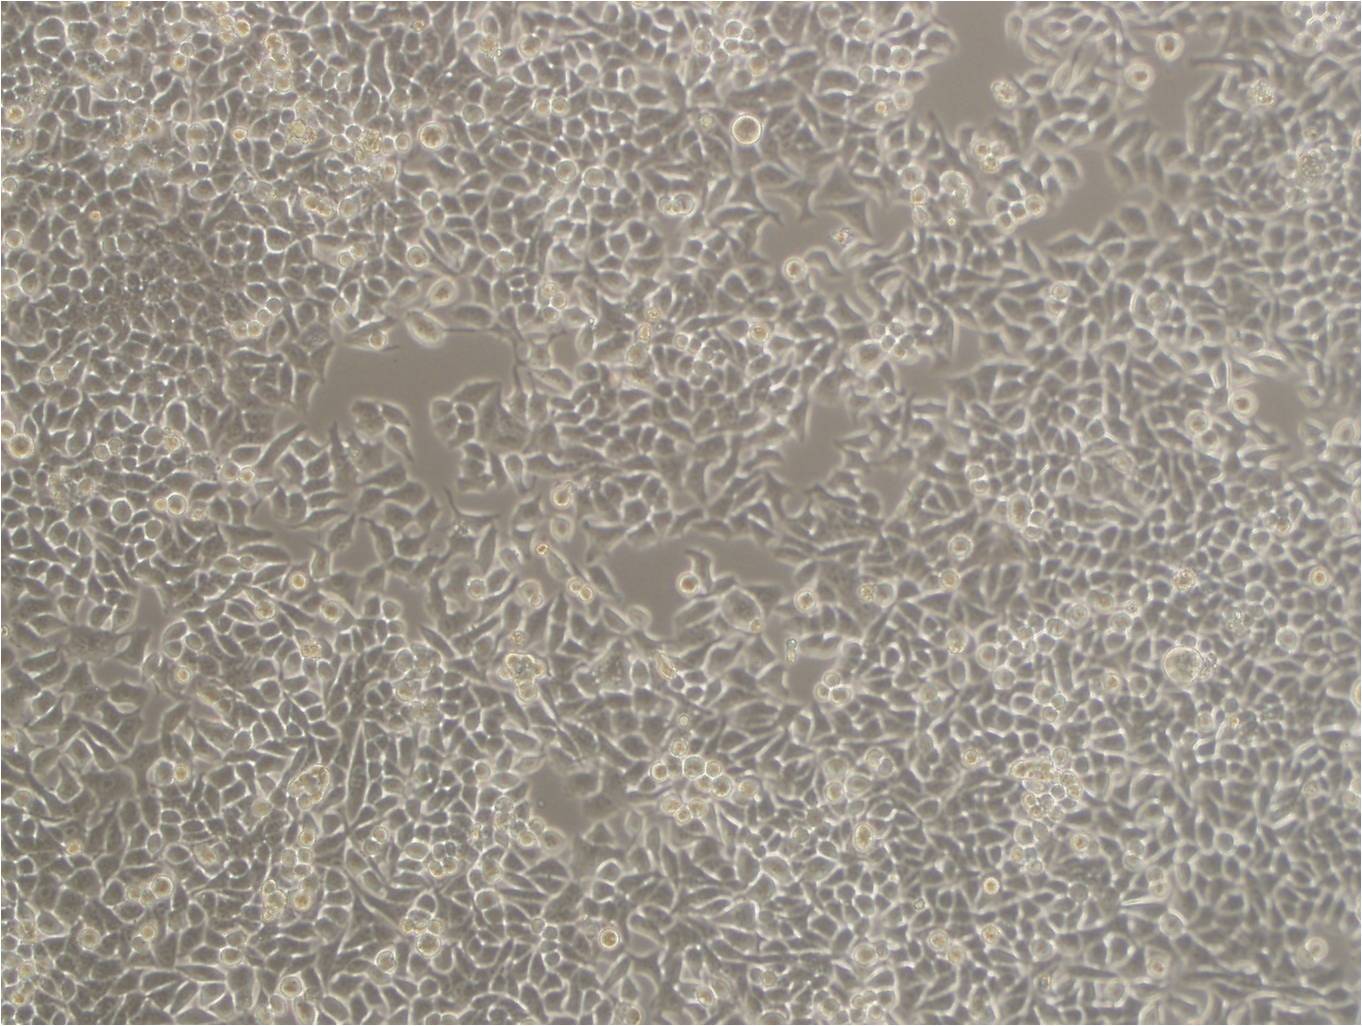 YES-2 epithelioid cells人食管鳞癌细胞系